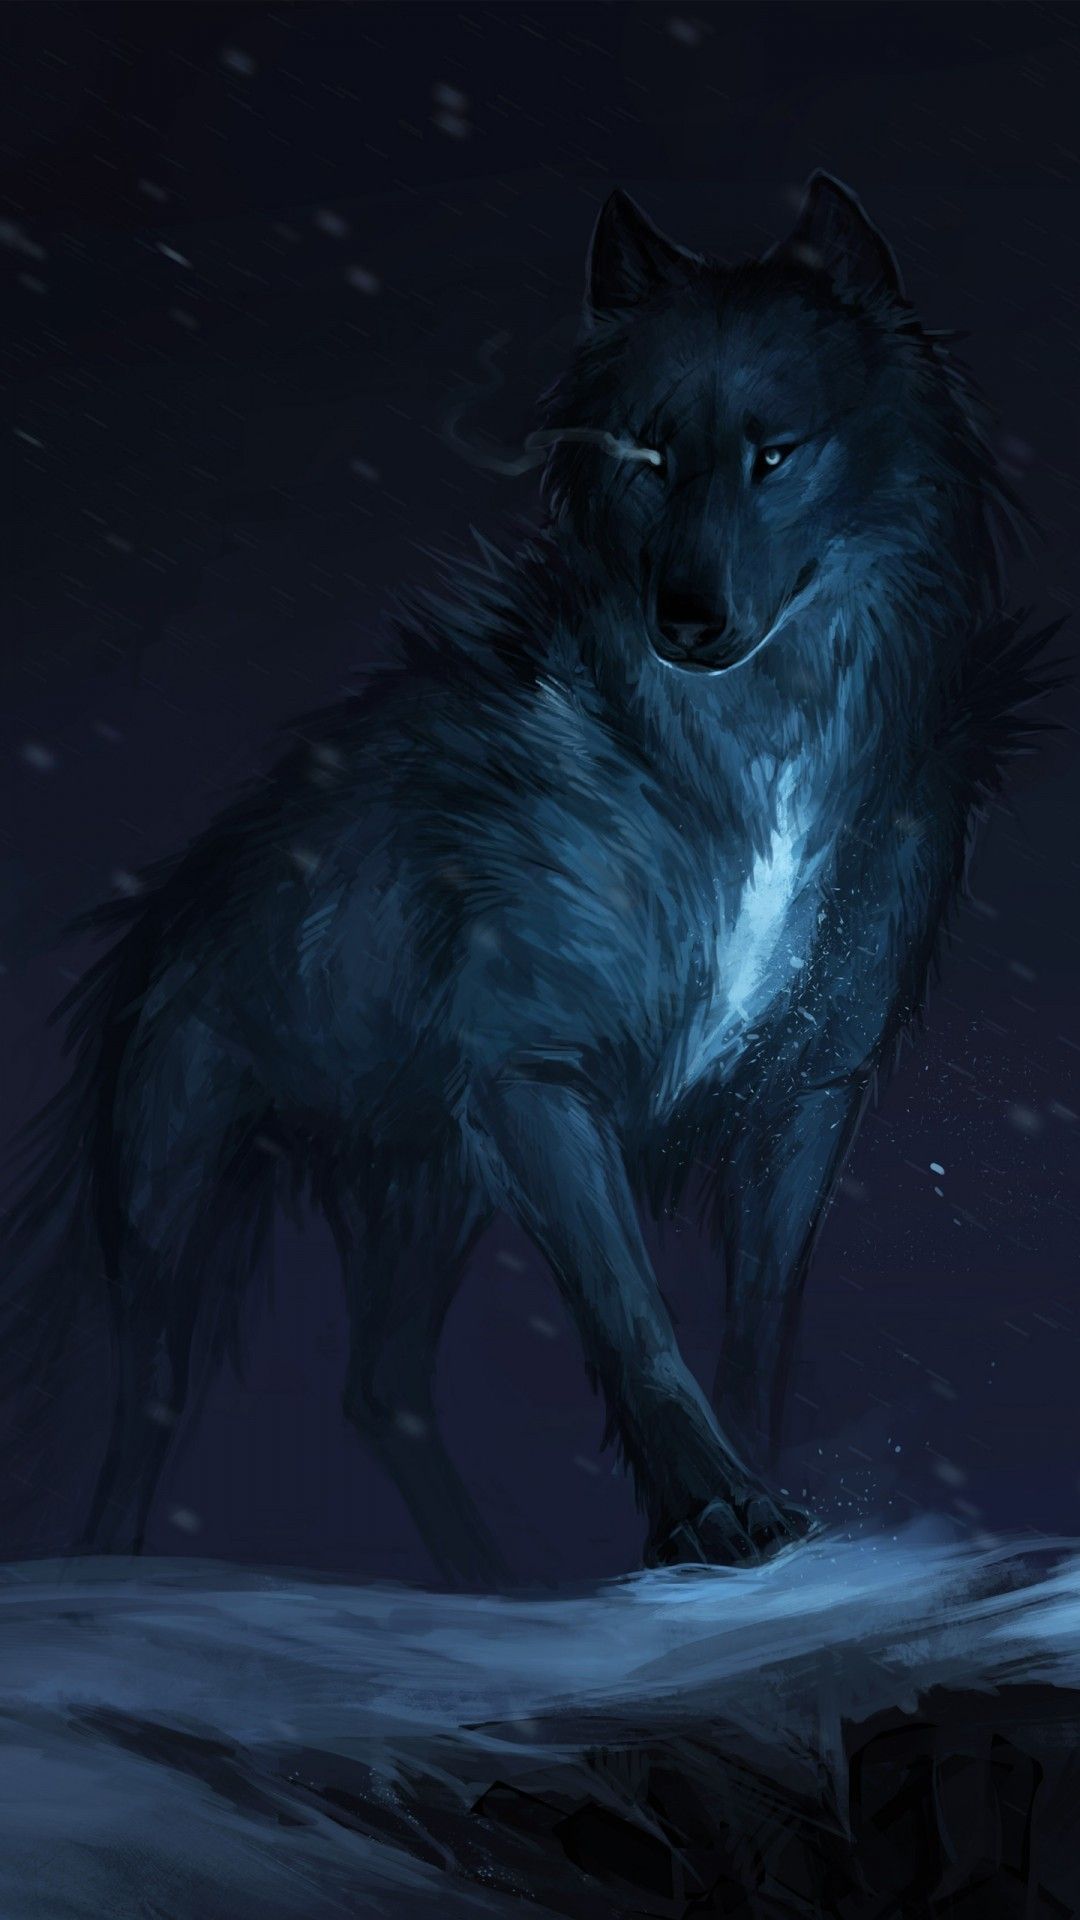 Inspirational Badass Wolf Wallpaper. Wolf wallpaper, Fantasy wolf, Wolf drawing